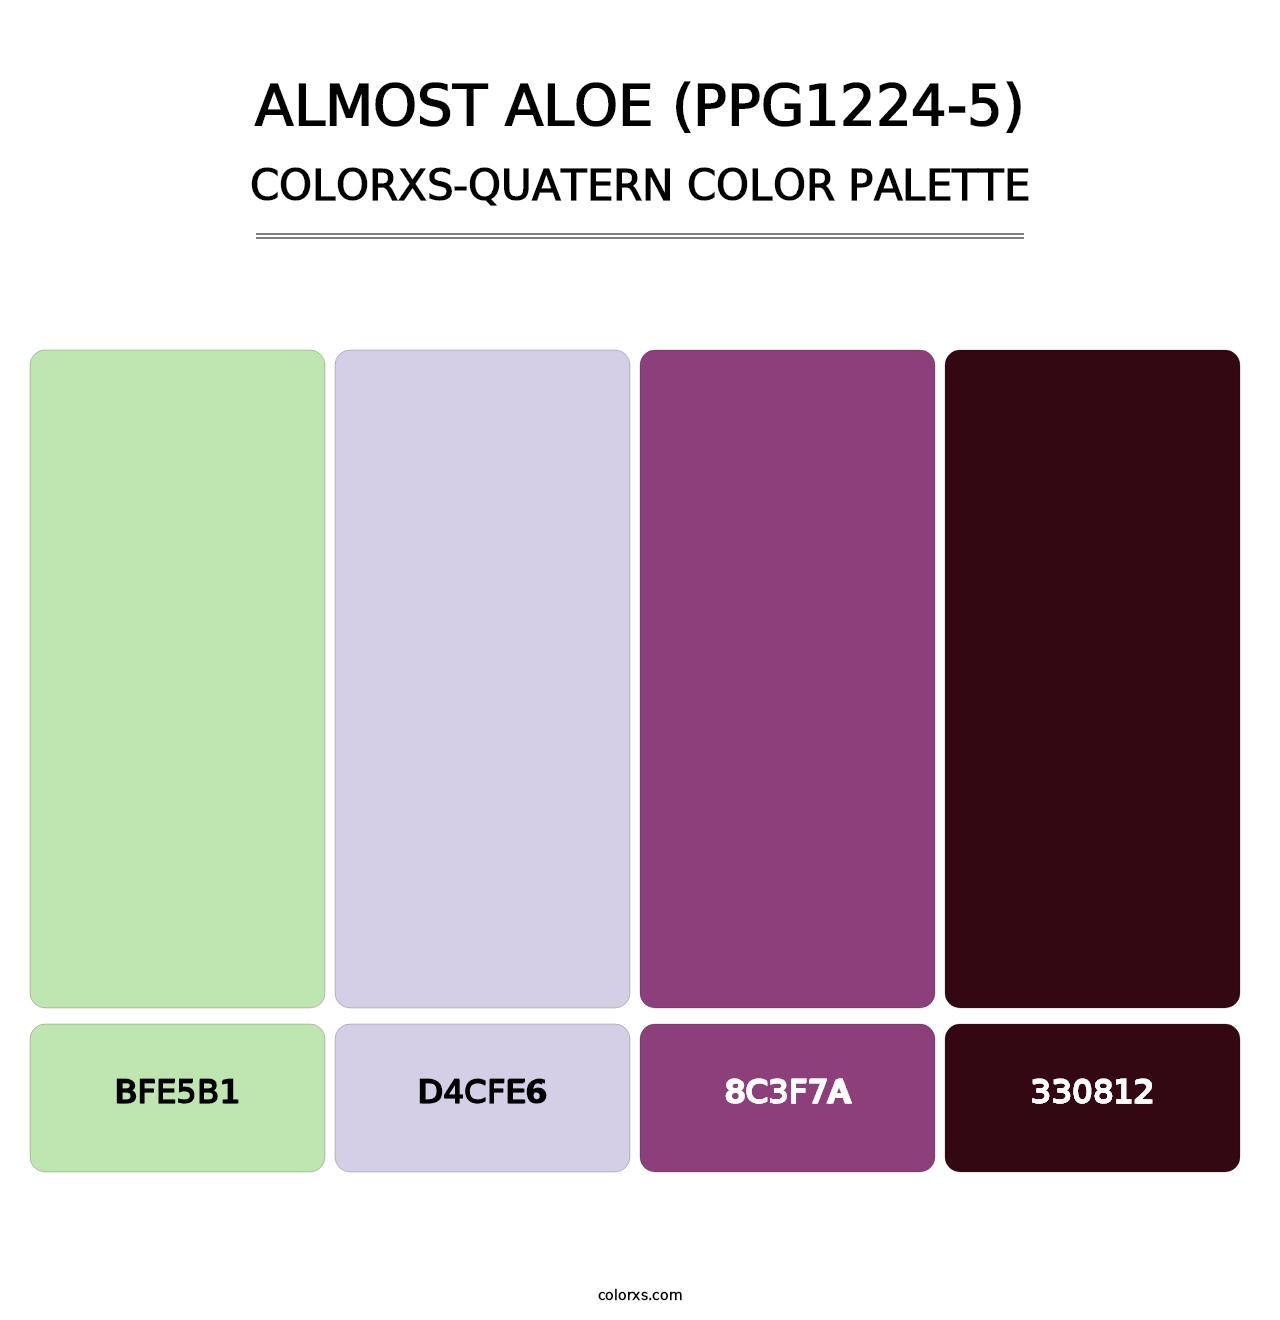 Almost Aloe (PPG1224-5) - Colorxs Quatern Palette